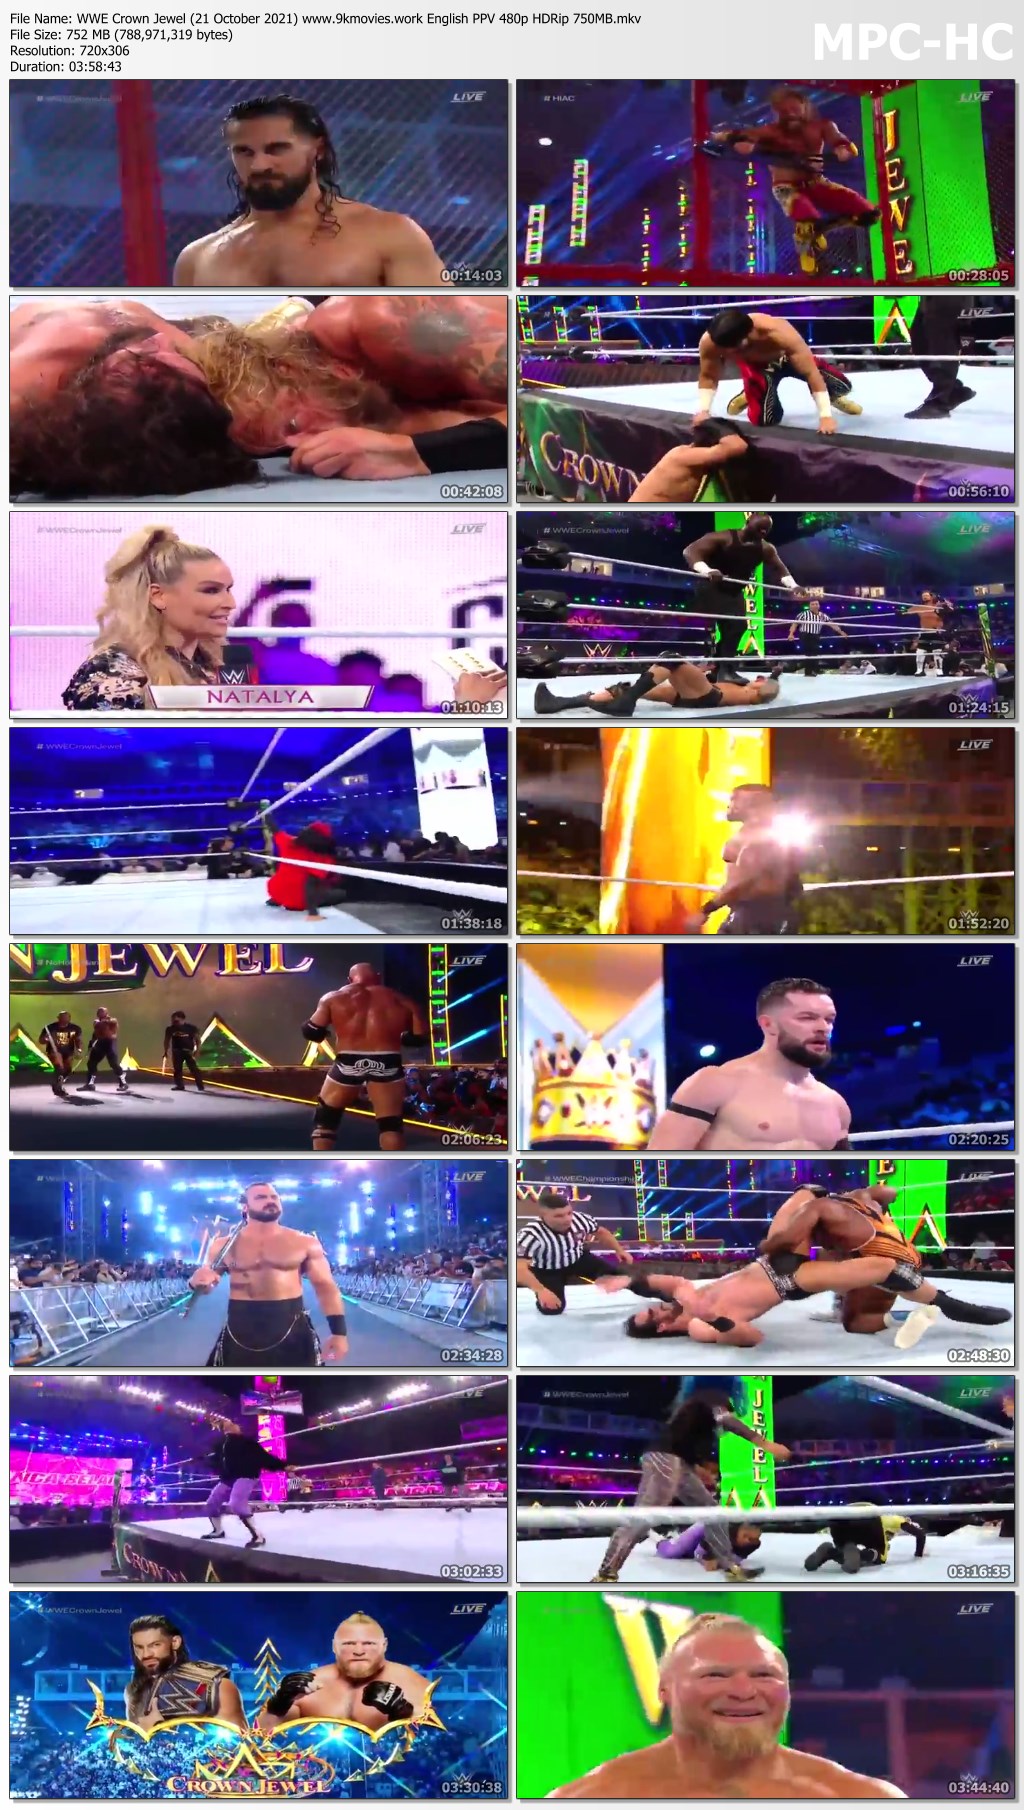 WWE Crown Jewel 21 October 2021 www.9kmovies.work English PPV 480p HDRip 750MB.mkv thumbs3522c40190a648c0